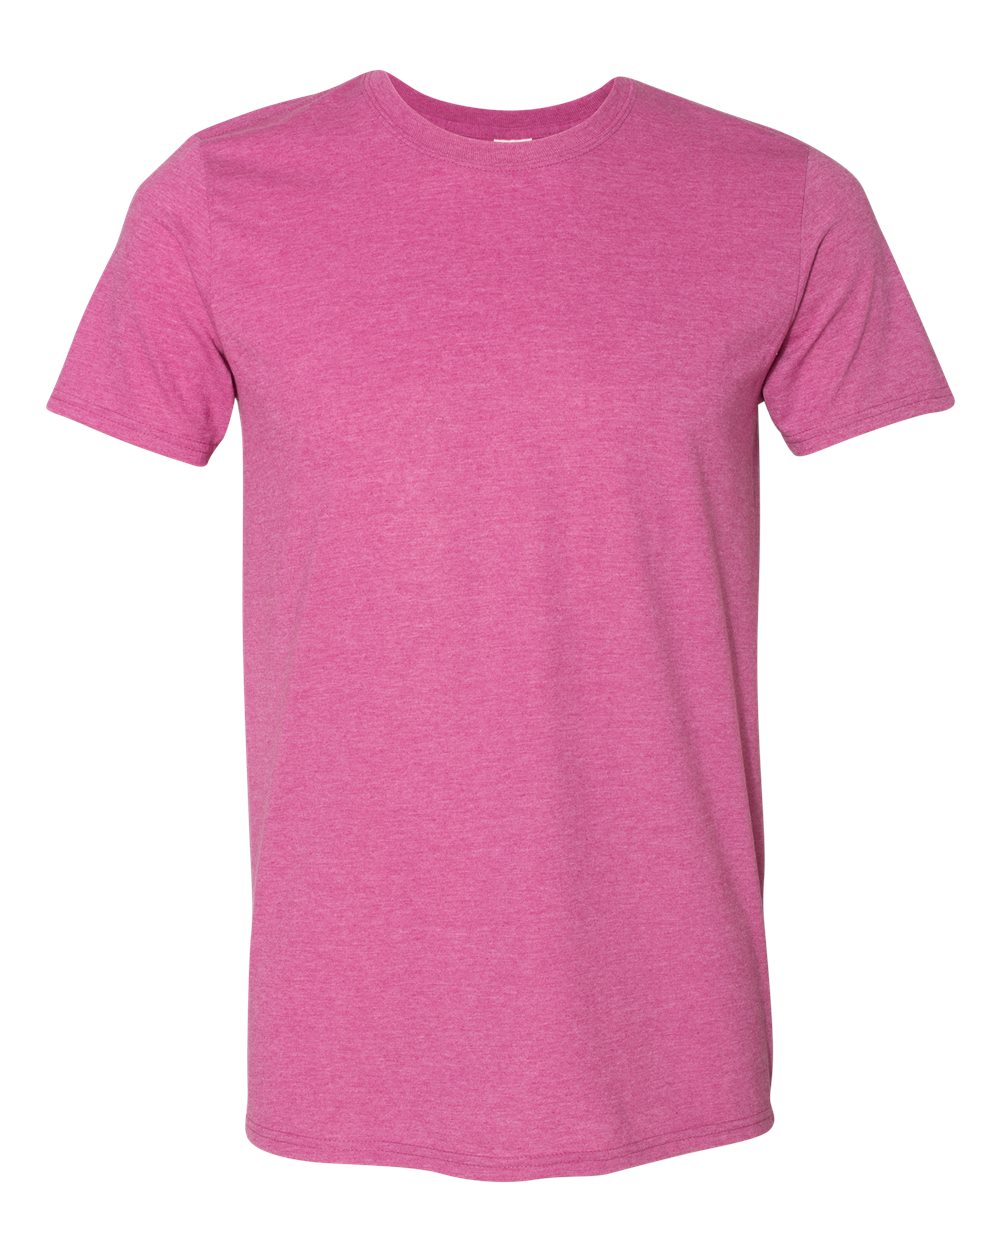 Gildan 64000 - Men's SoftStyle T-Shirt $2.88 - Men's T-Shirts